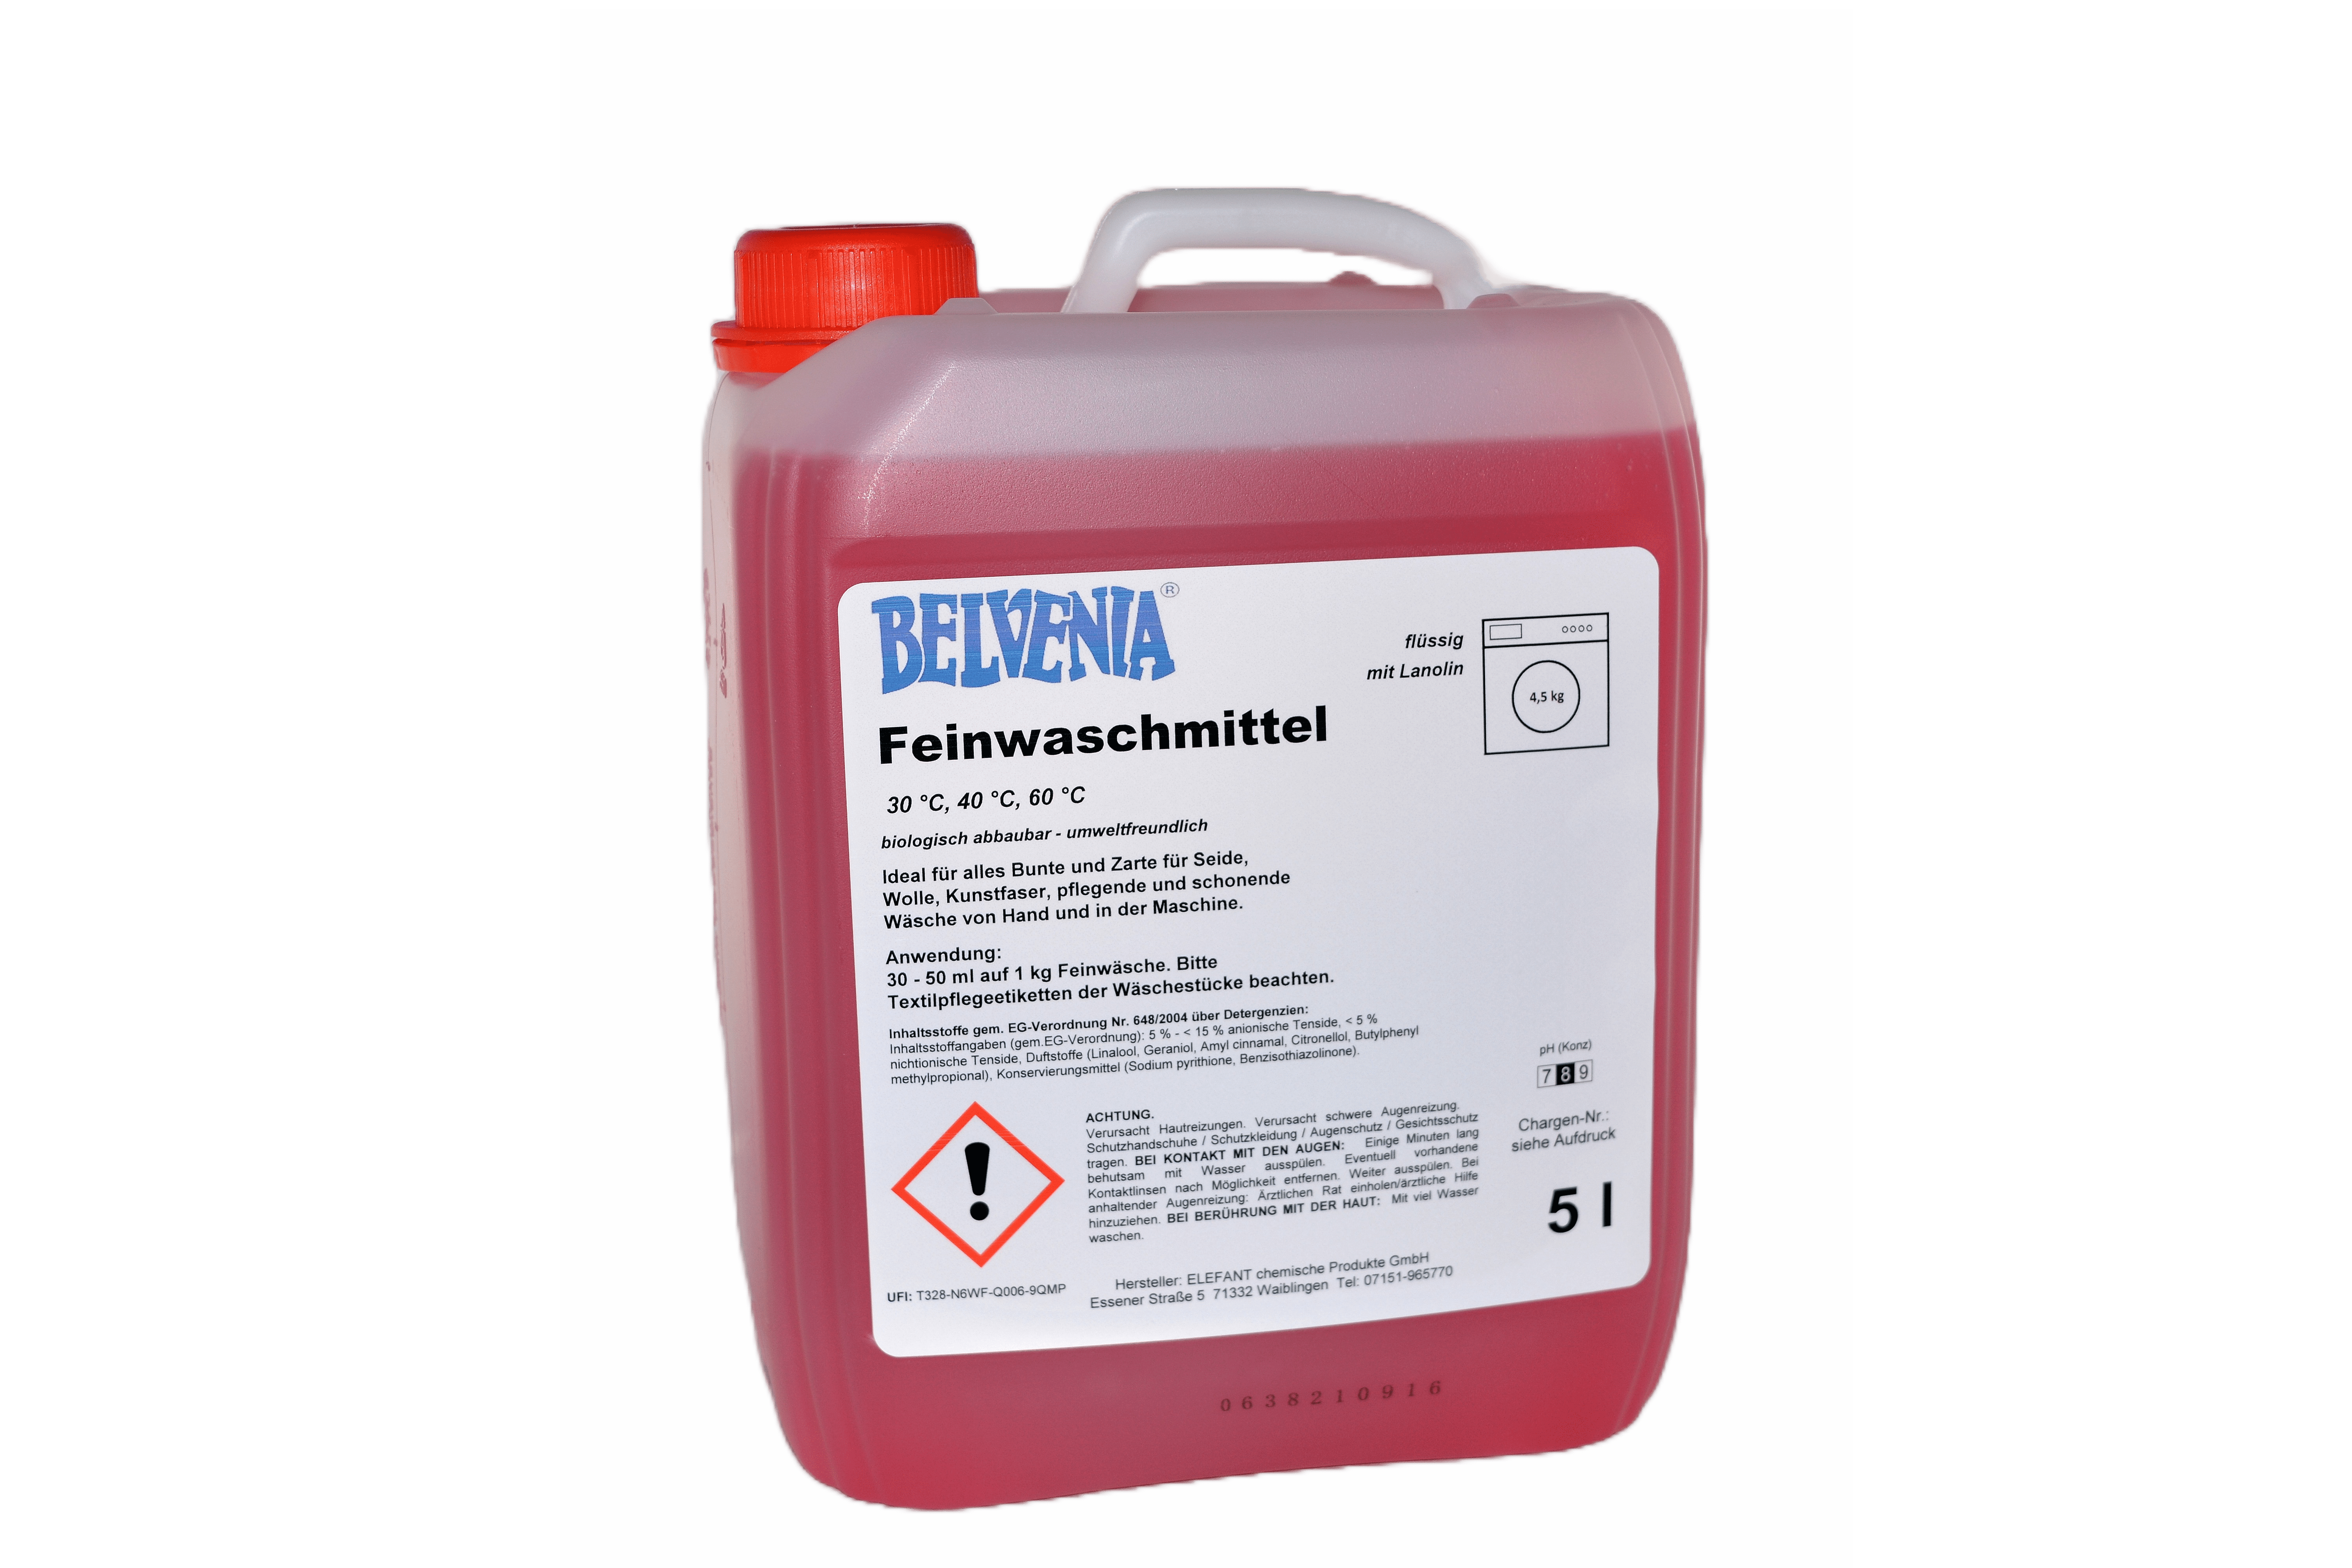 BELVENIA-Feinwaschmittel 5 Liter Kanister